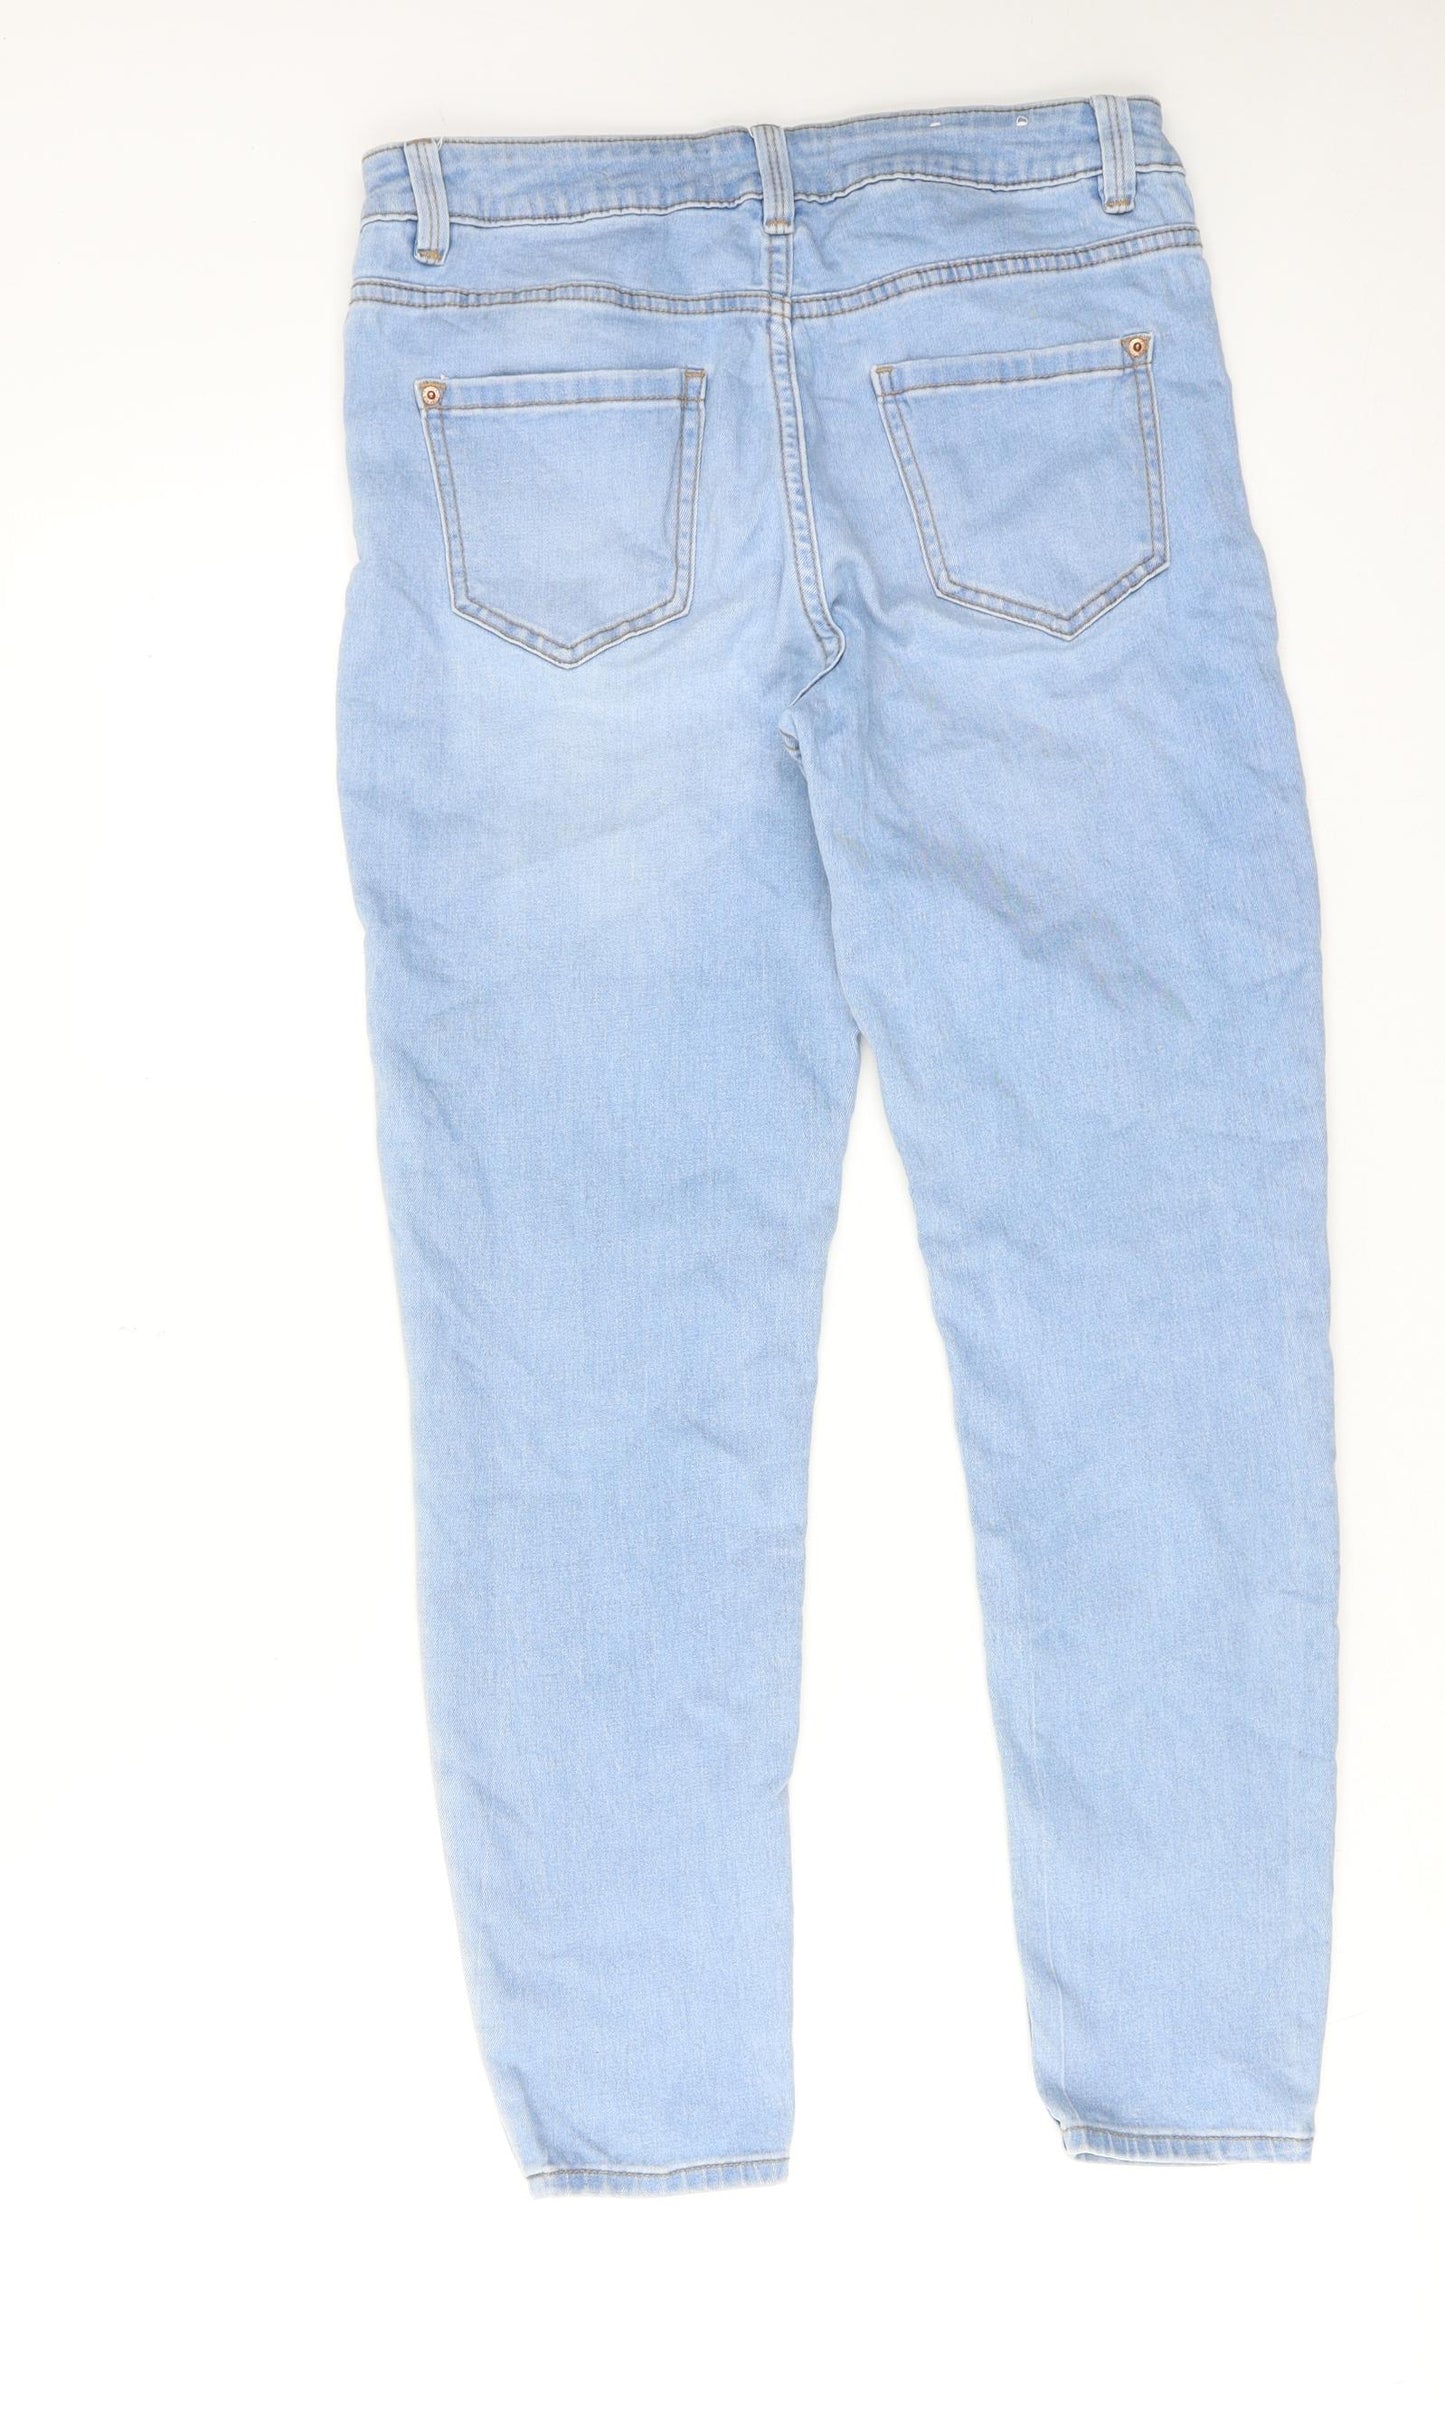 New Look Womens Blue Cotton Skinny Jeans Size 12 Regular Zip